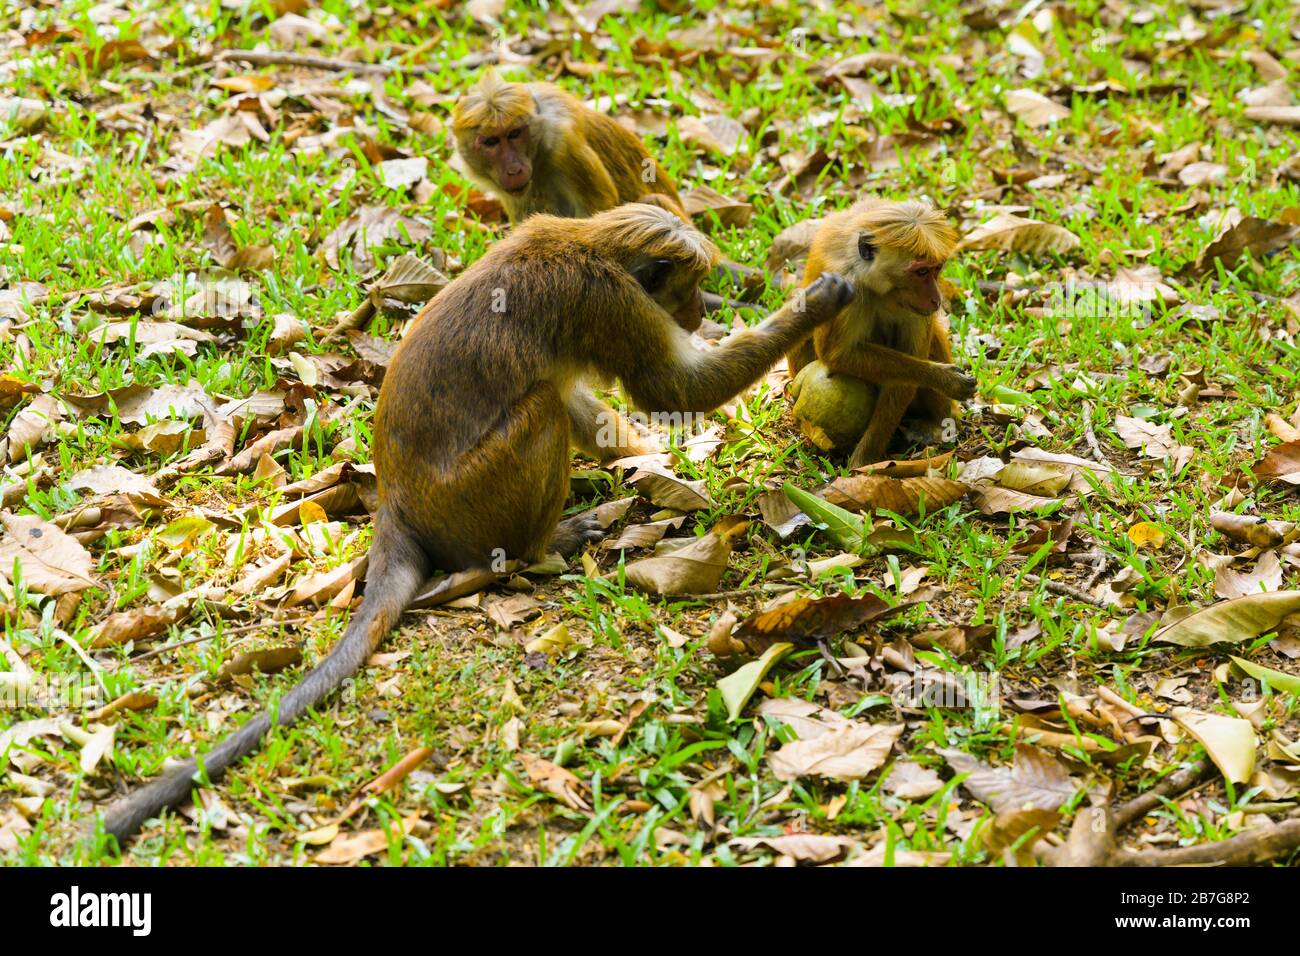 Asia meridionale Sri Lanka Royal Botanical Gardens Perradeniya ha iniziato 1371 re Wickramabahu scimmie selvatiche toque macaque Macaca Sinica Foto Stock